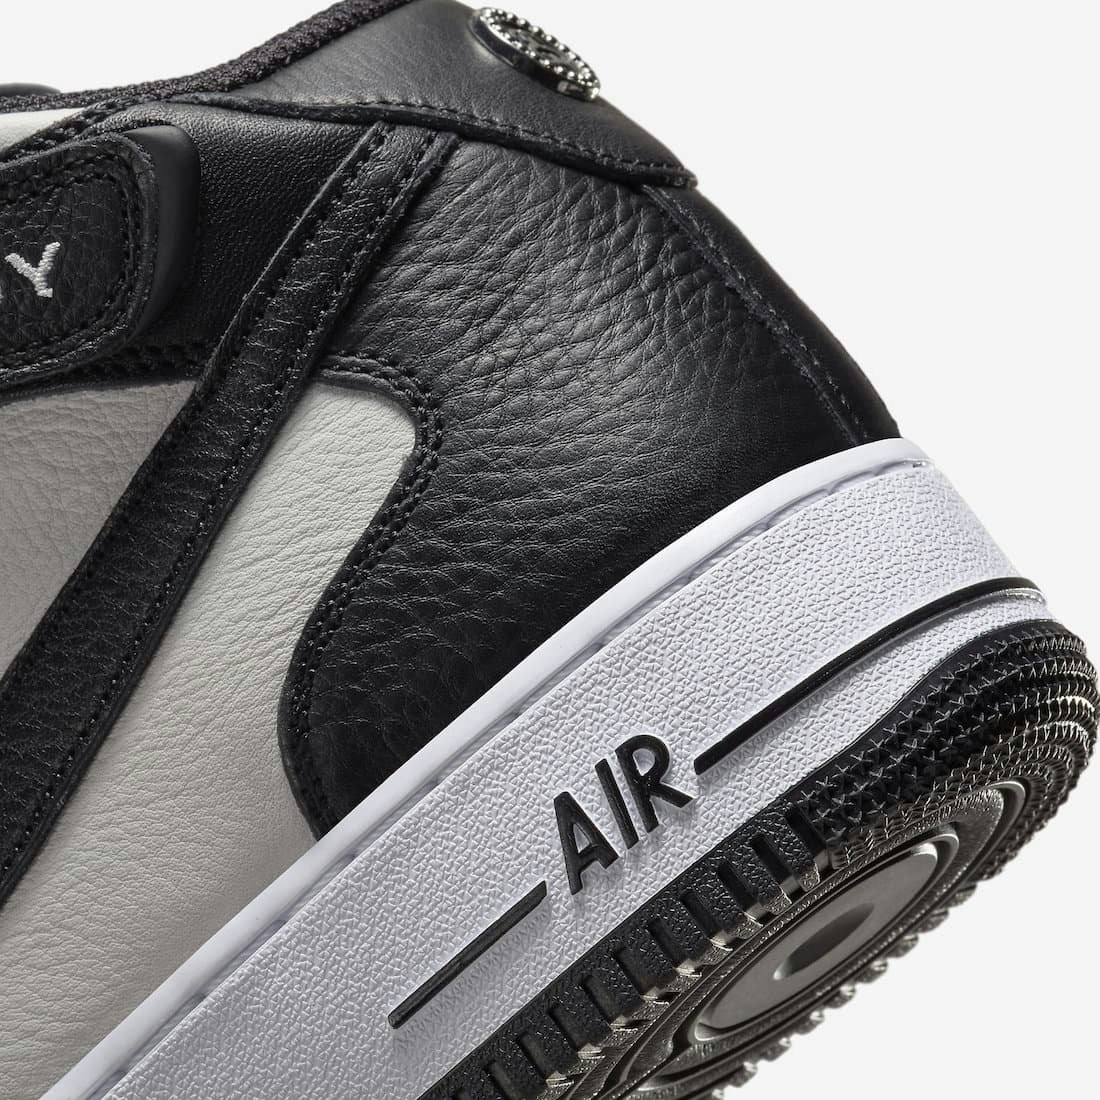 Stüssy x Nike Air Force 1 Mid "Black/White"